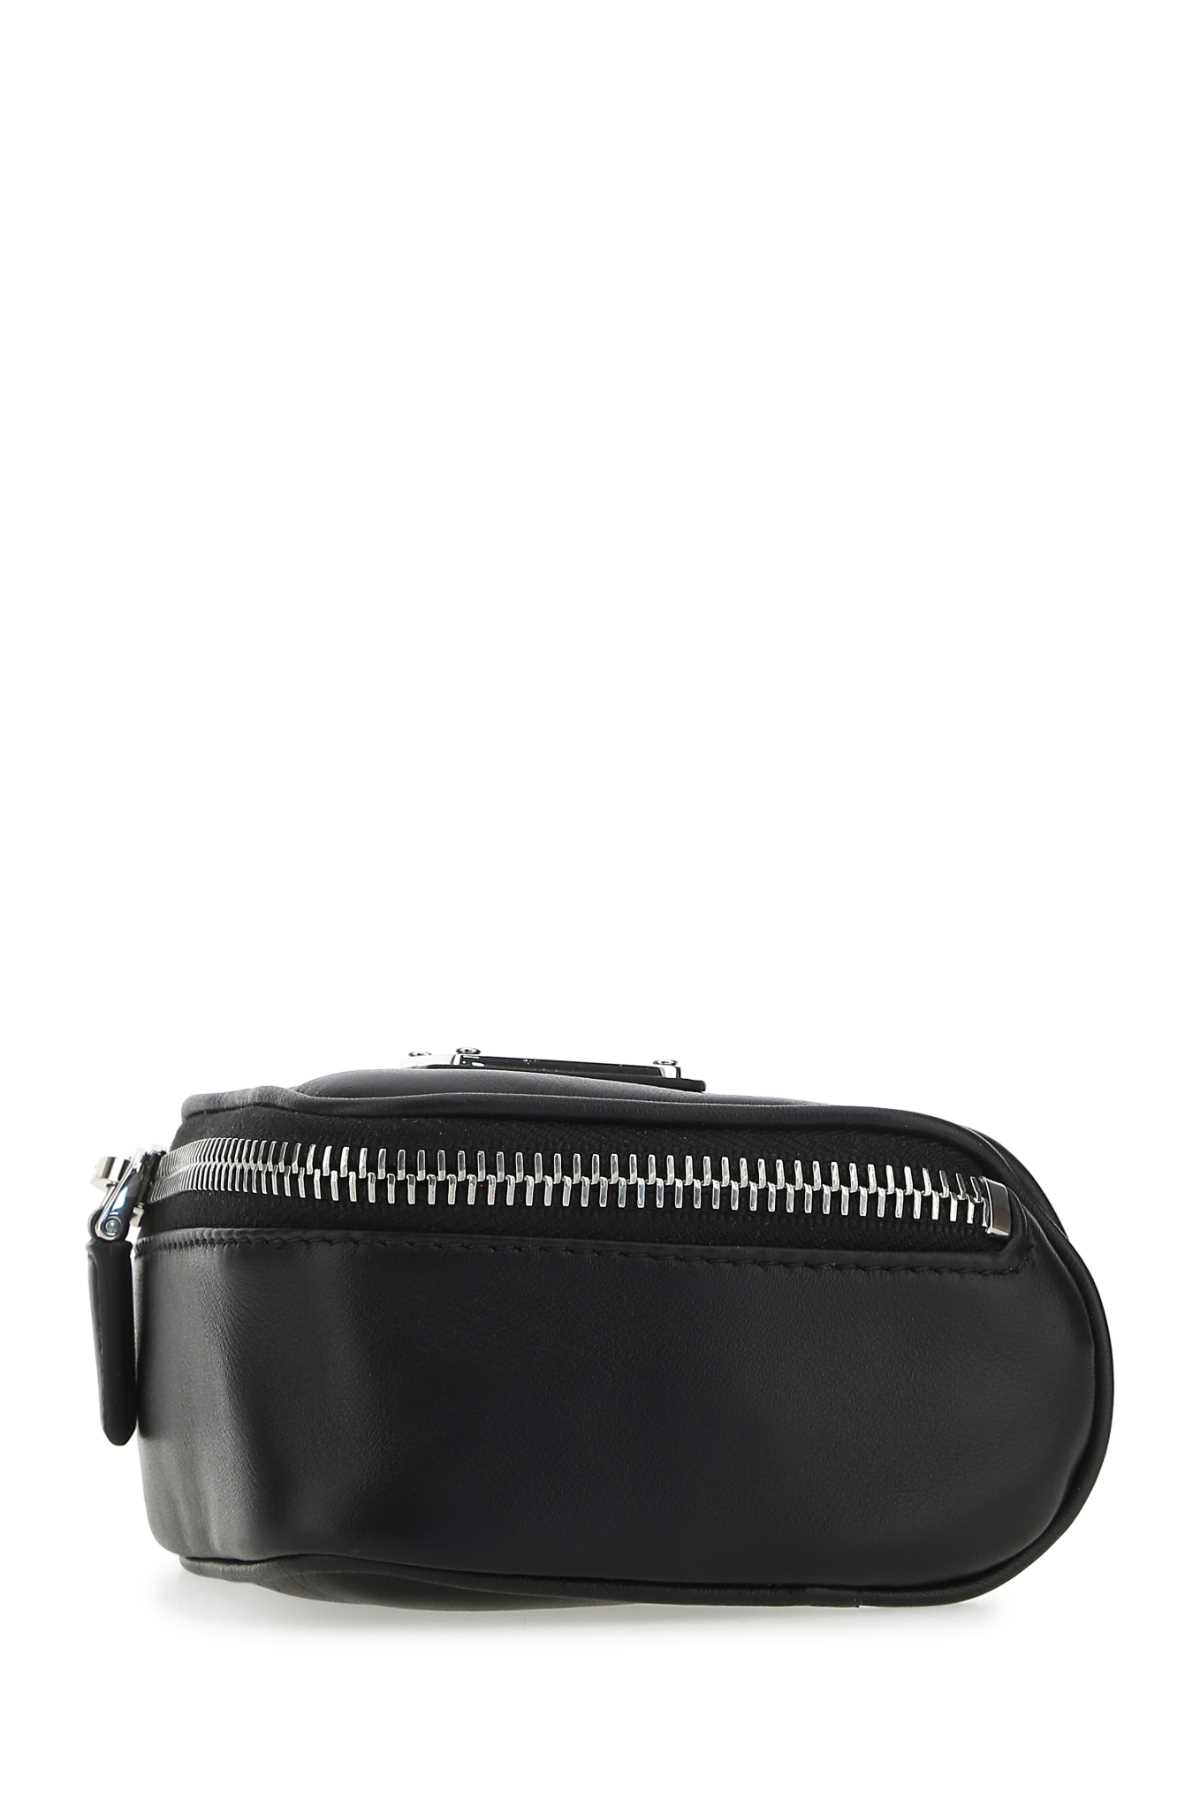 Prada Black Leather Case In F0002